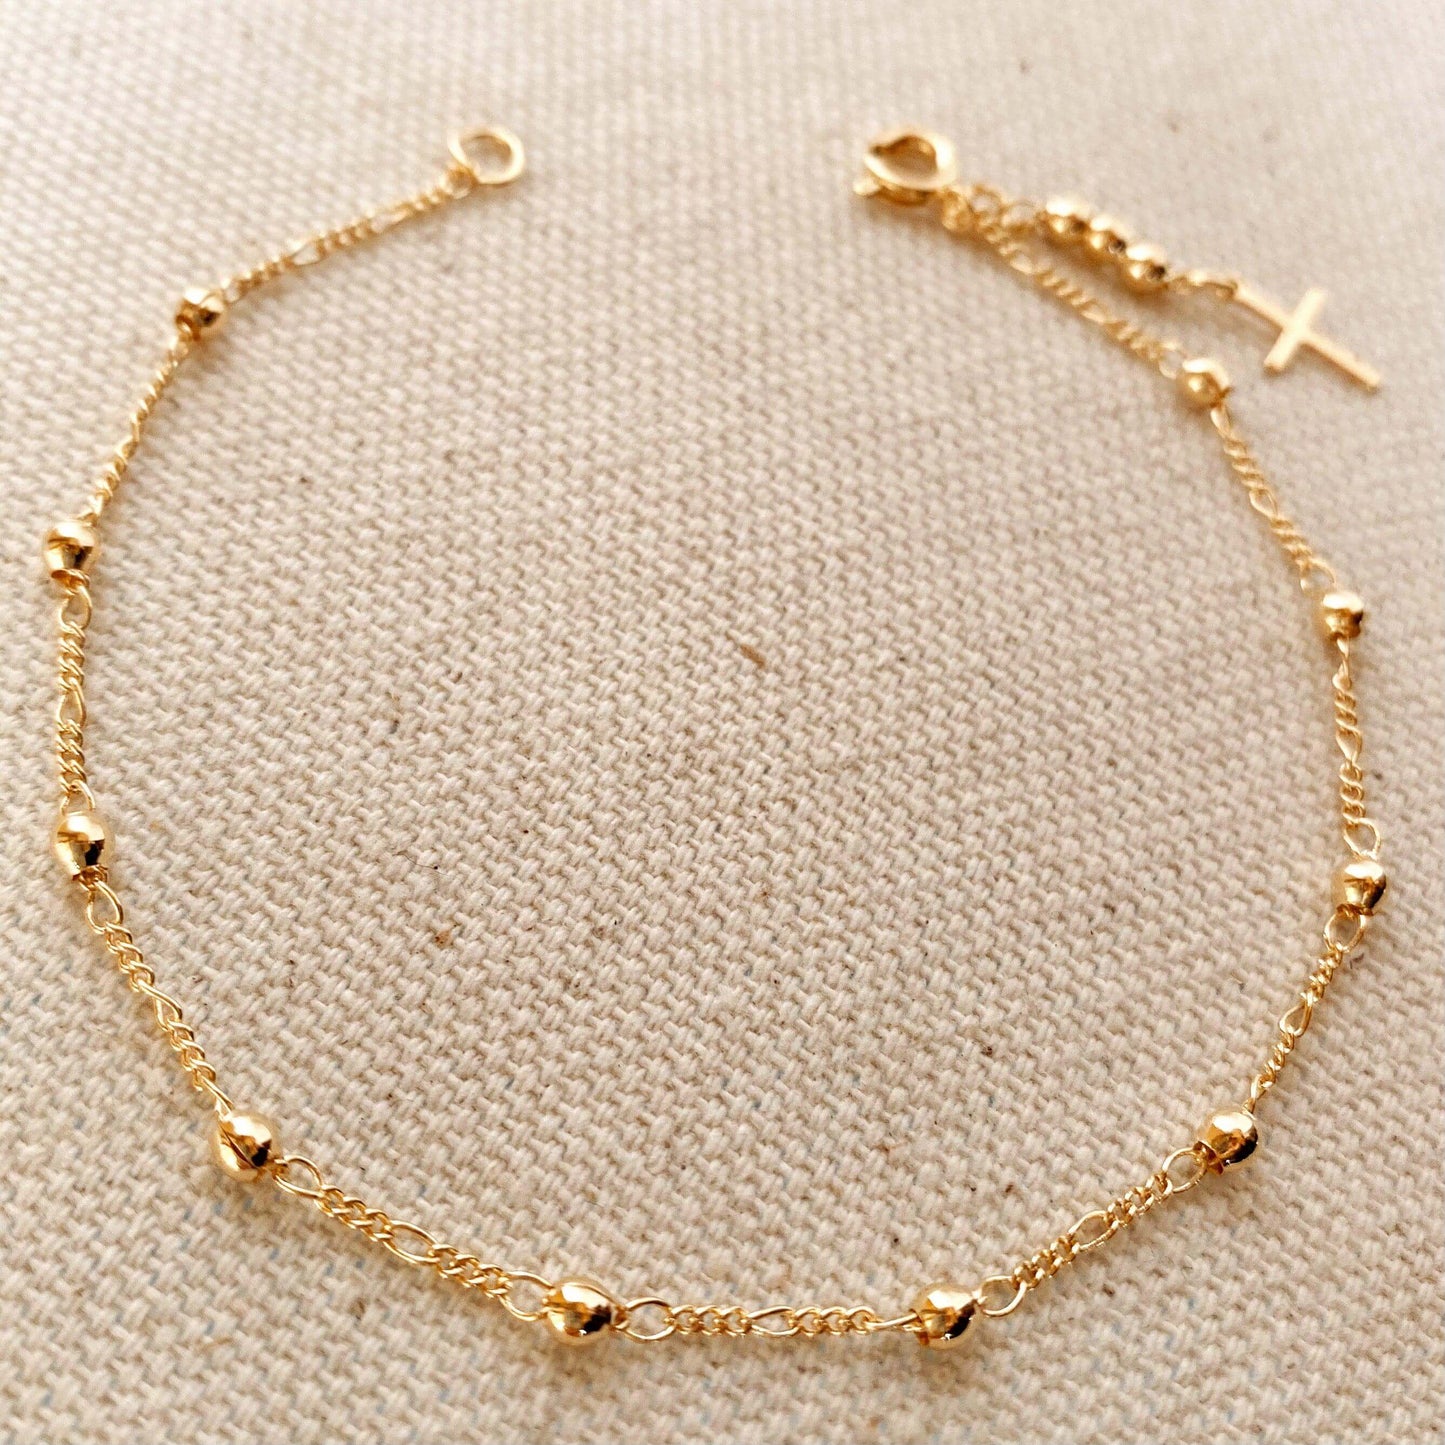 18k Gold Filled Beaded Bracelet with Cross Charm